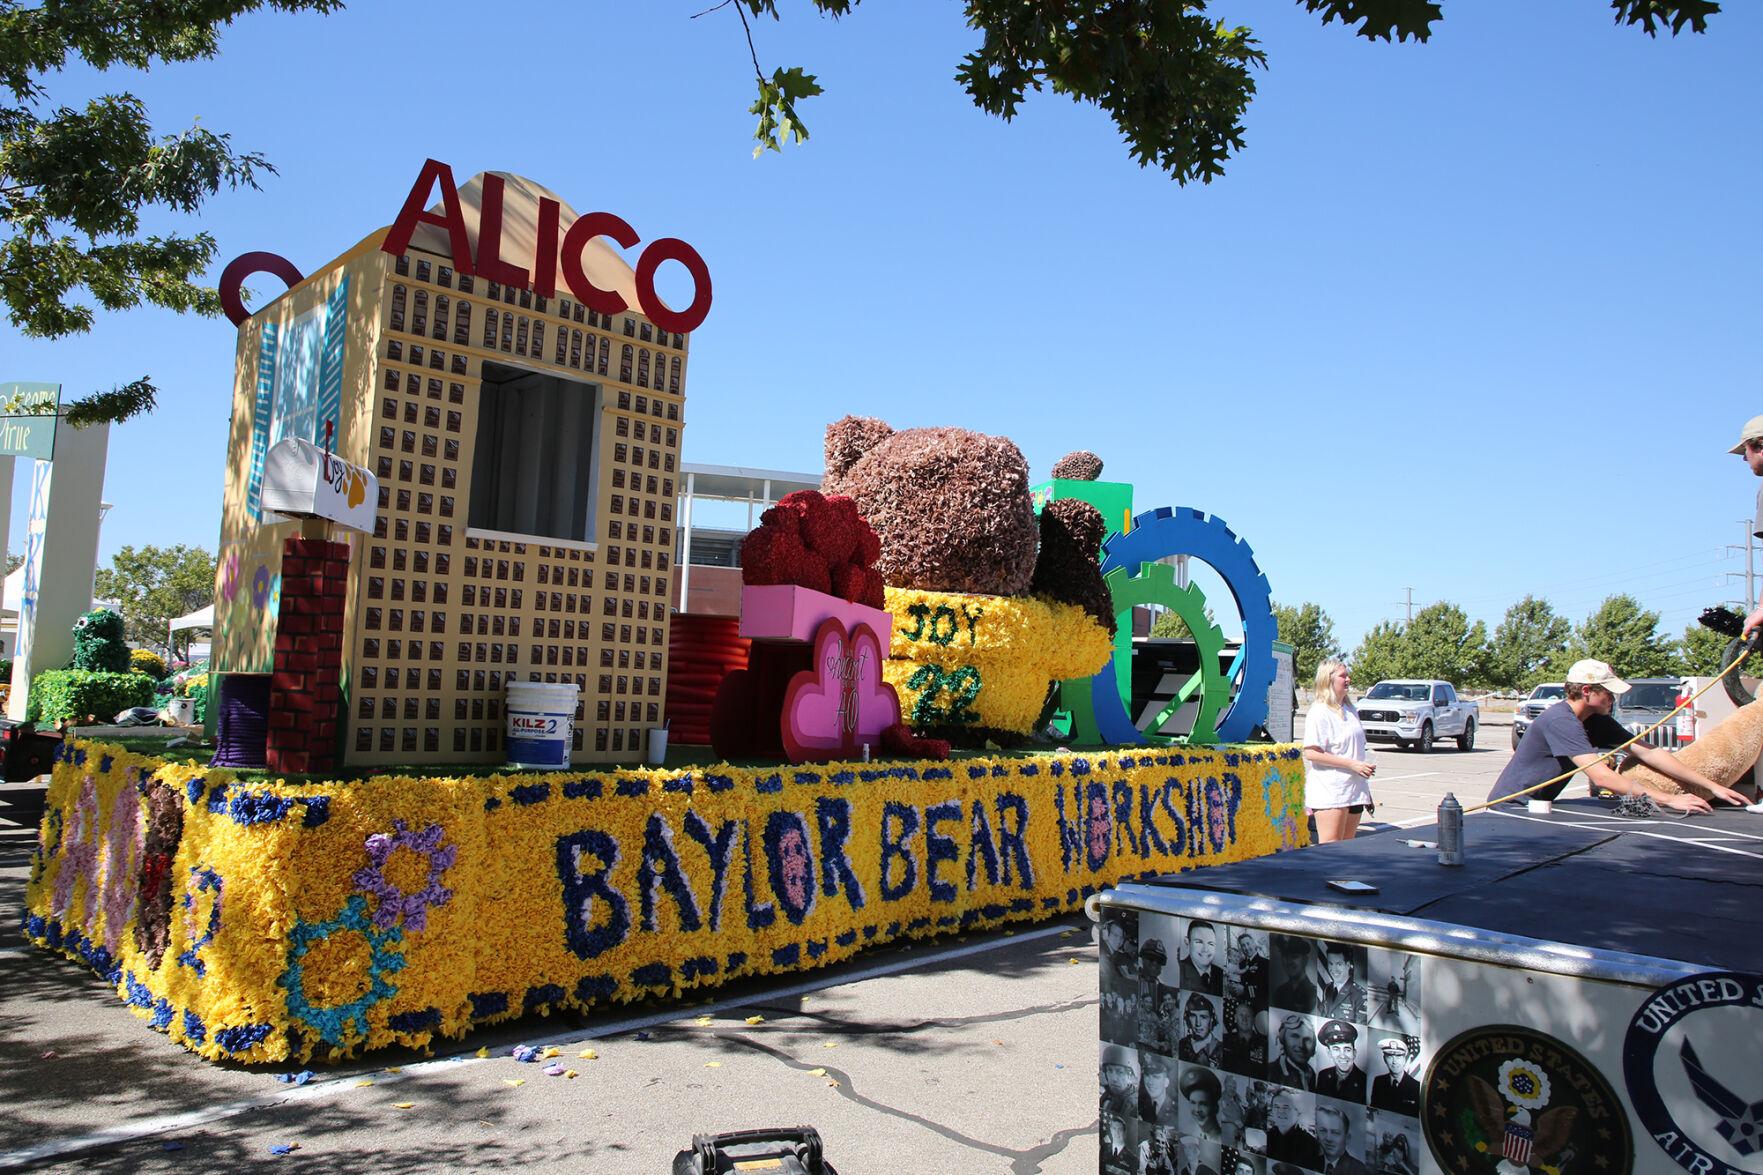 PHOTOS — Baylor floats for 2022 parade